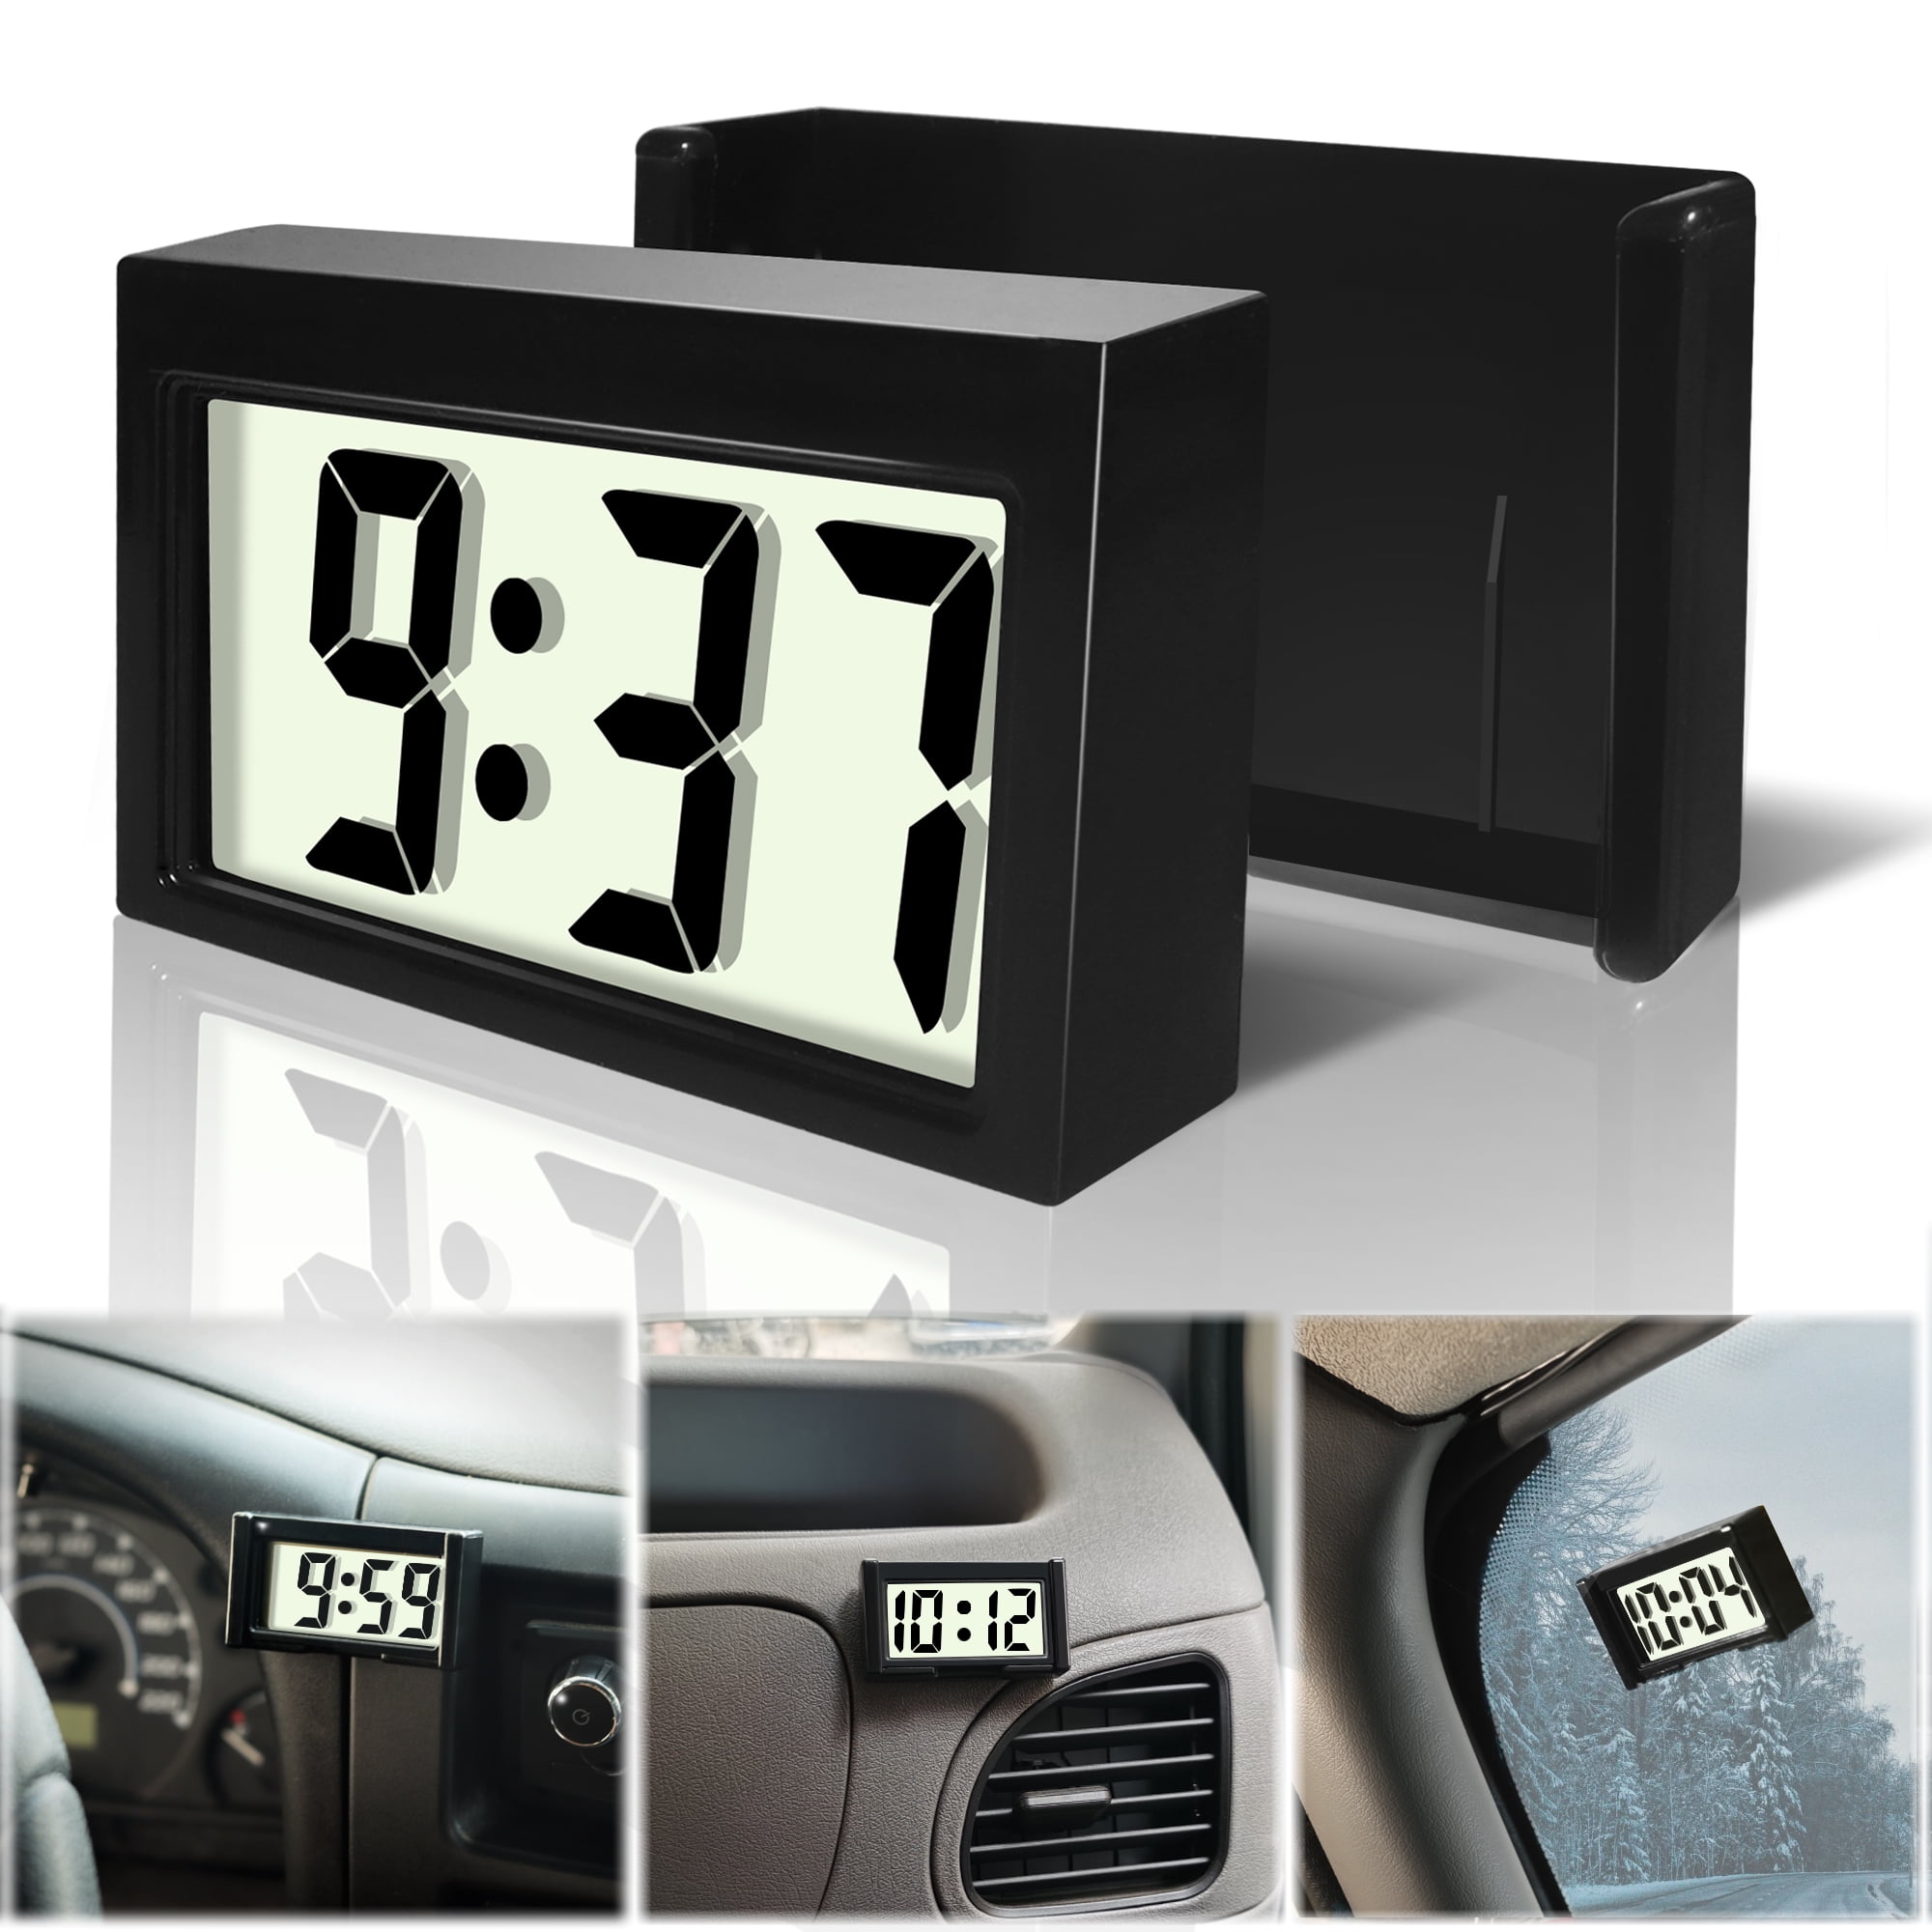 LCD Digital Display Car Time Clock for Car-Truck-Bike Interior Windshield 